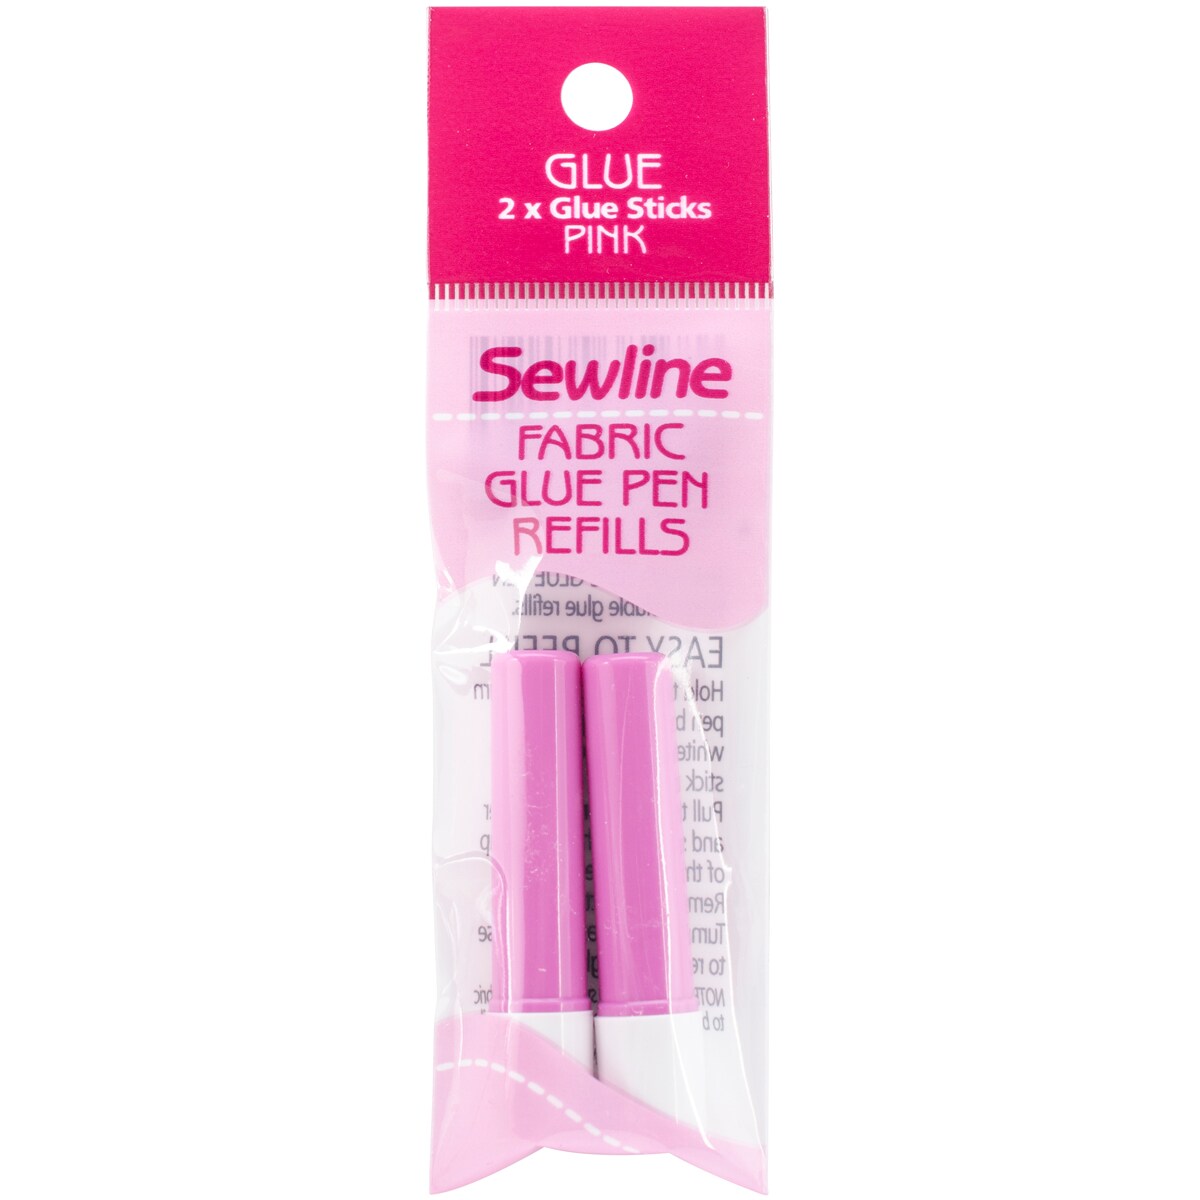 Sewline Fabric Glue Pen 